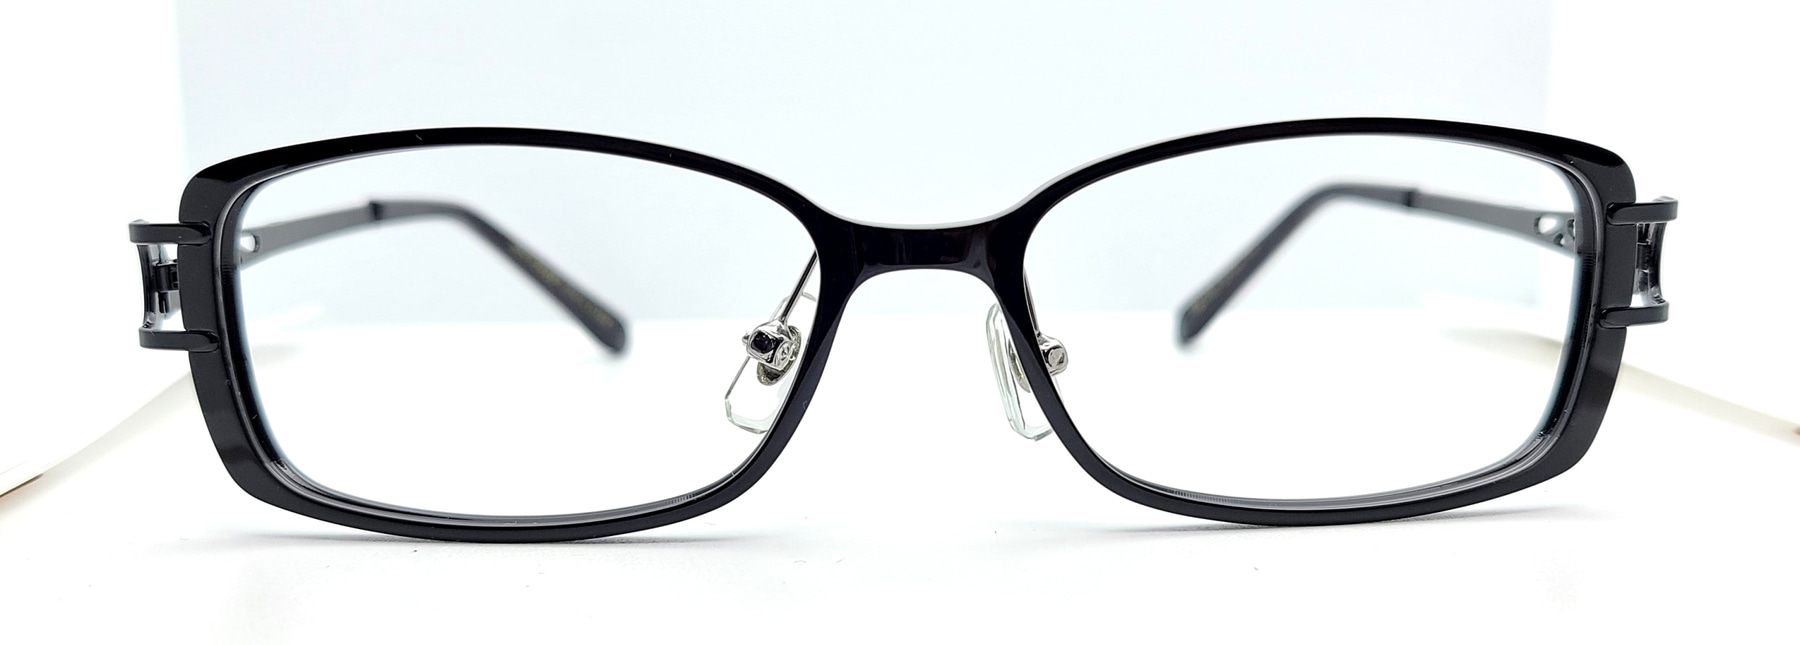 MINIHOUSE M-1362, Korean glasses, sunglasses, eyeglasses, glasses